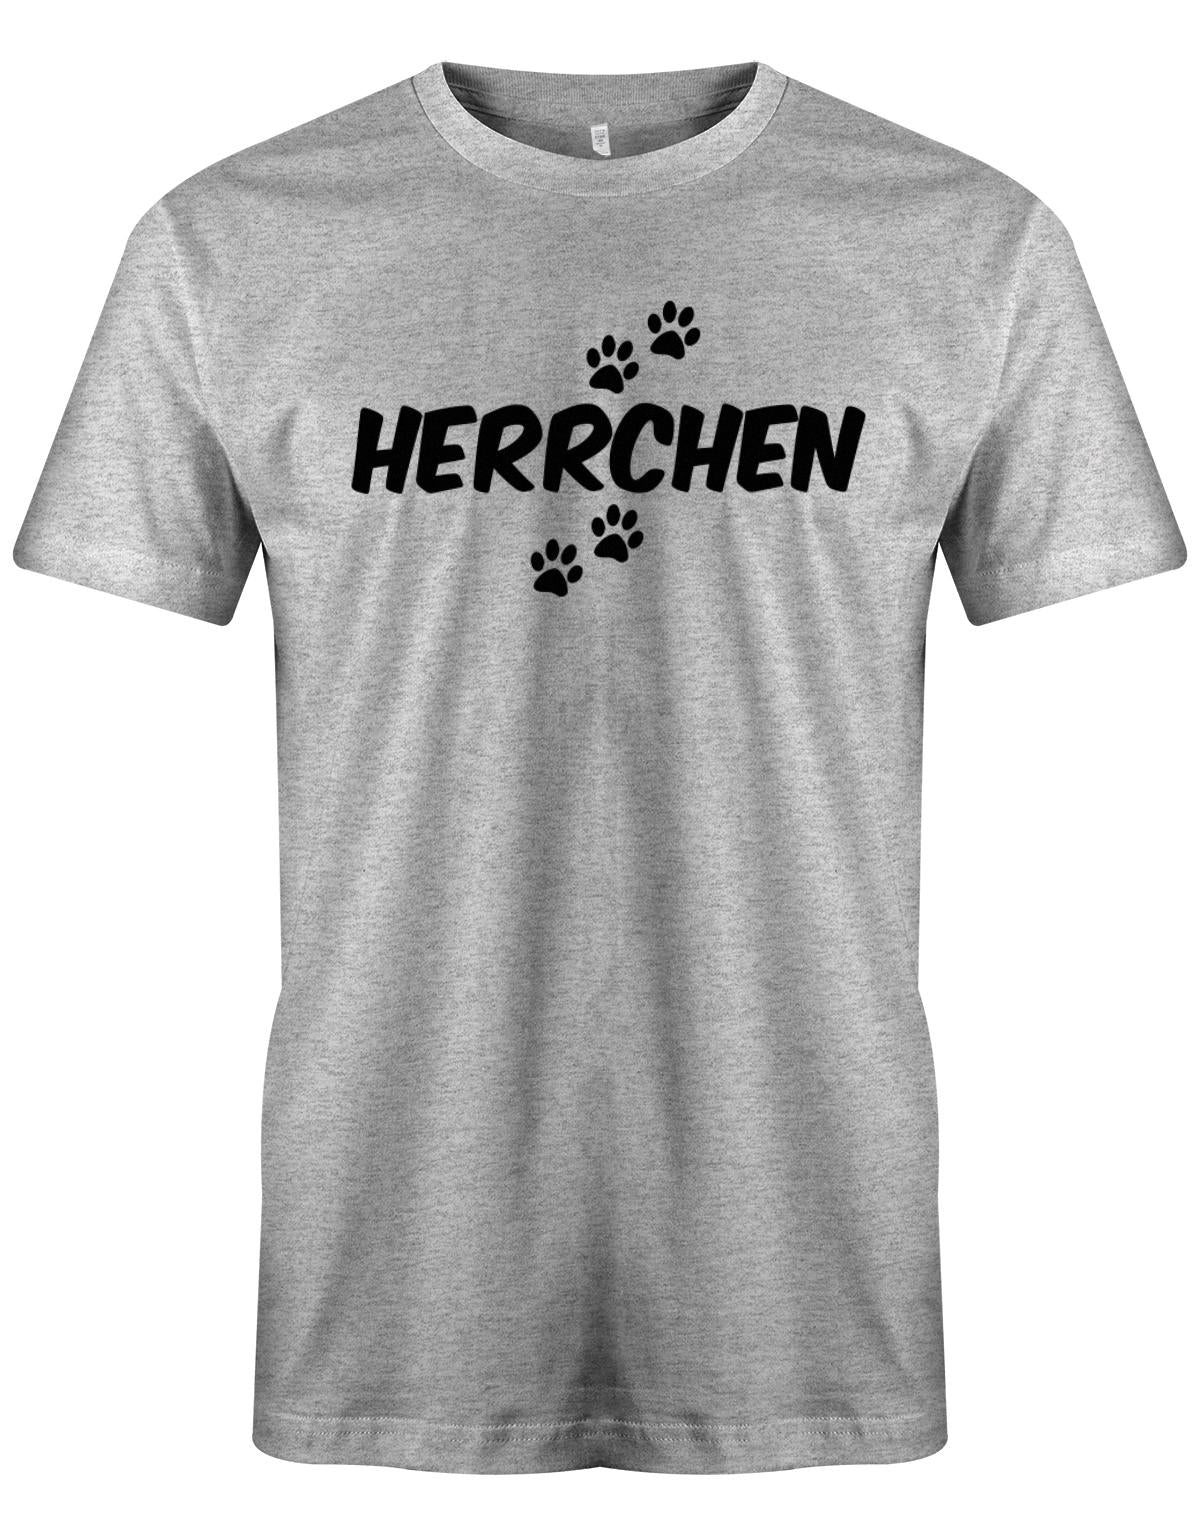 Herrchen-hundebesitzer-Herren-Shirt-Grau